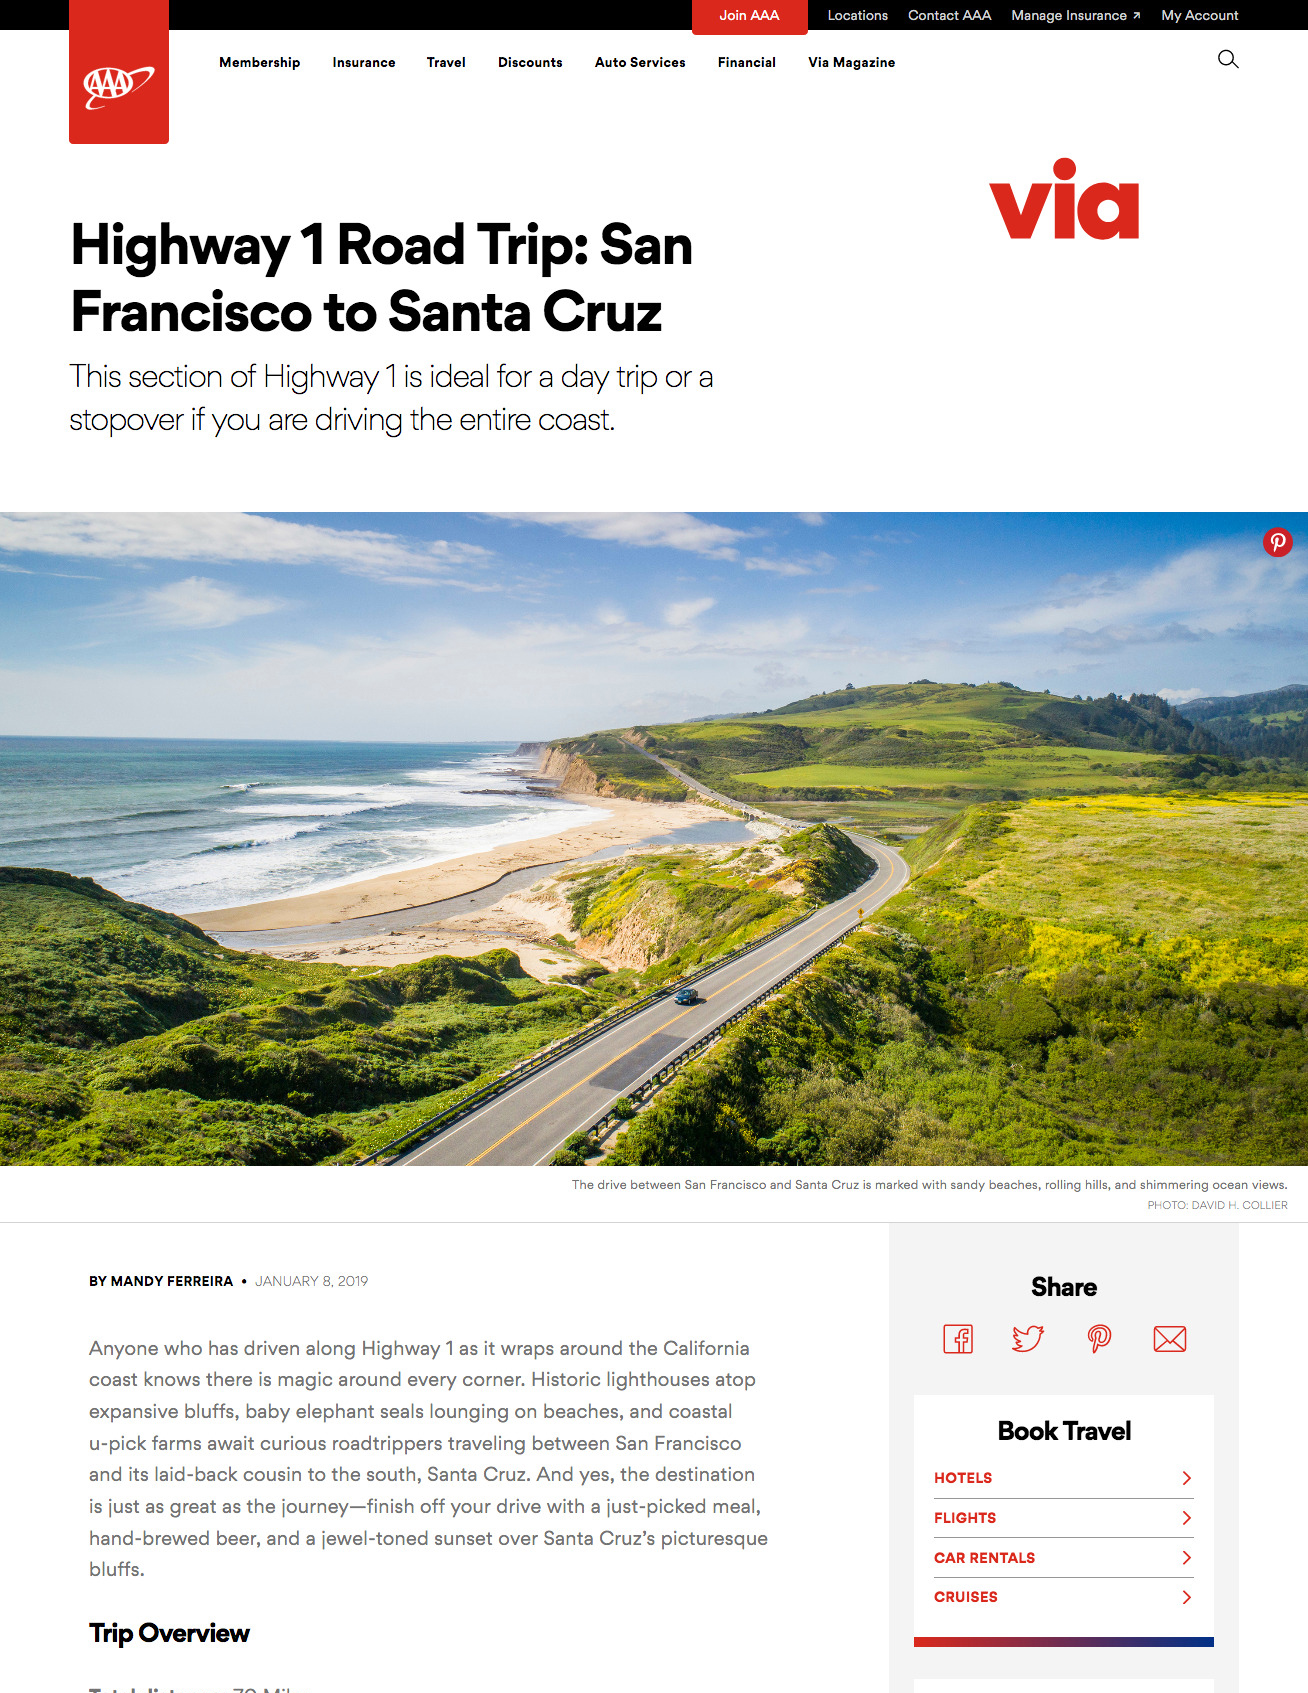 Highway 1 Road Trip: San Francisco to Santa Cruz, Mandy Ferreira for Via